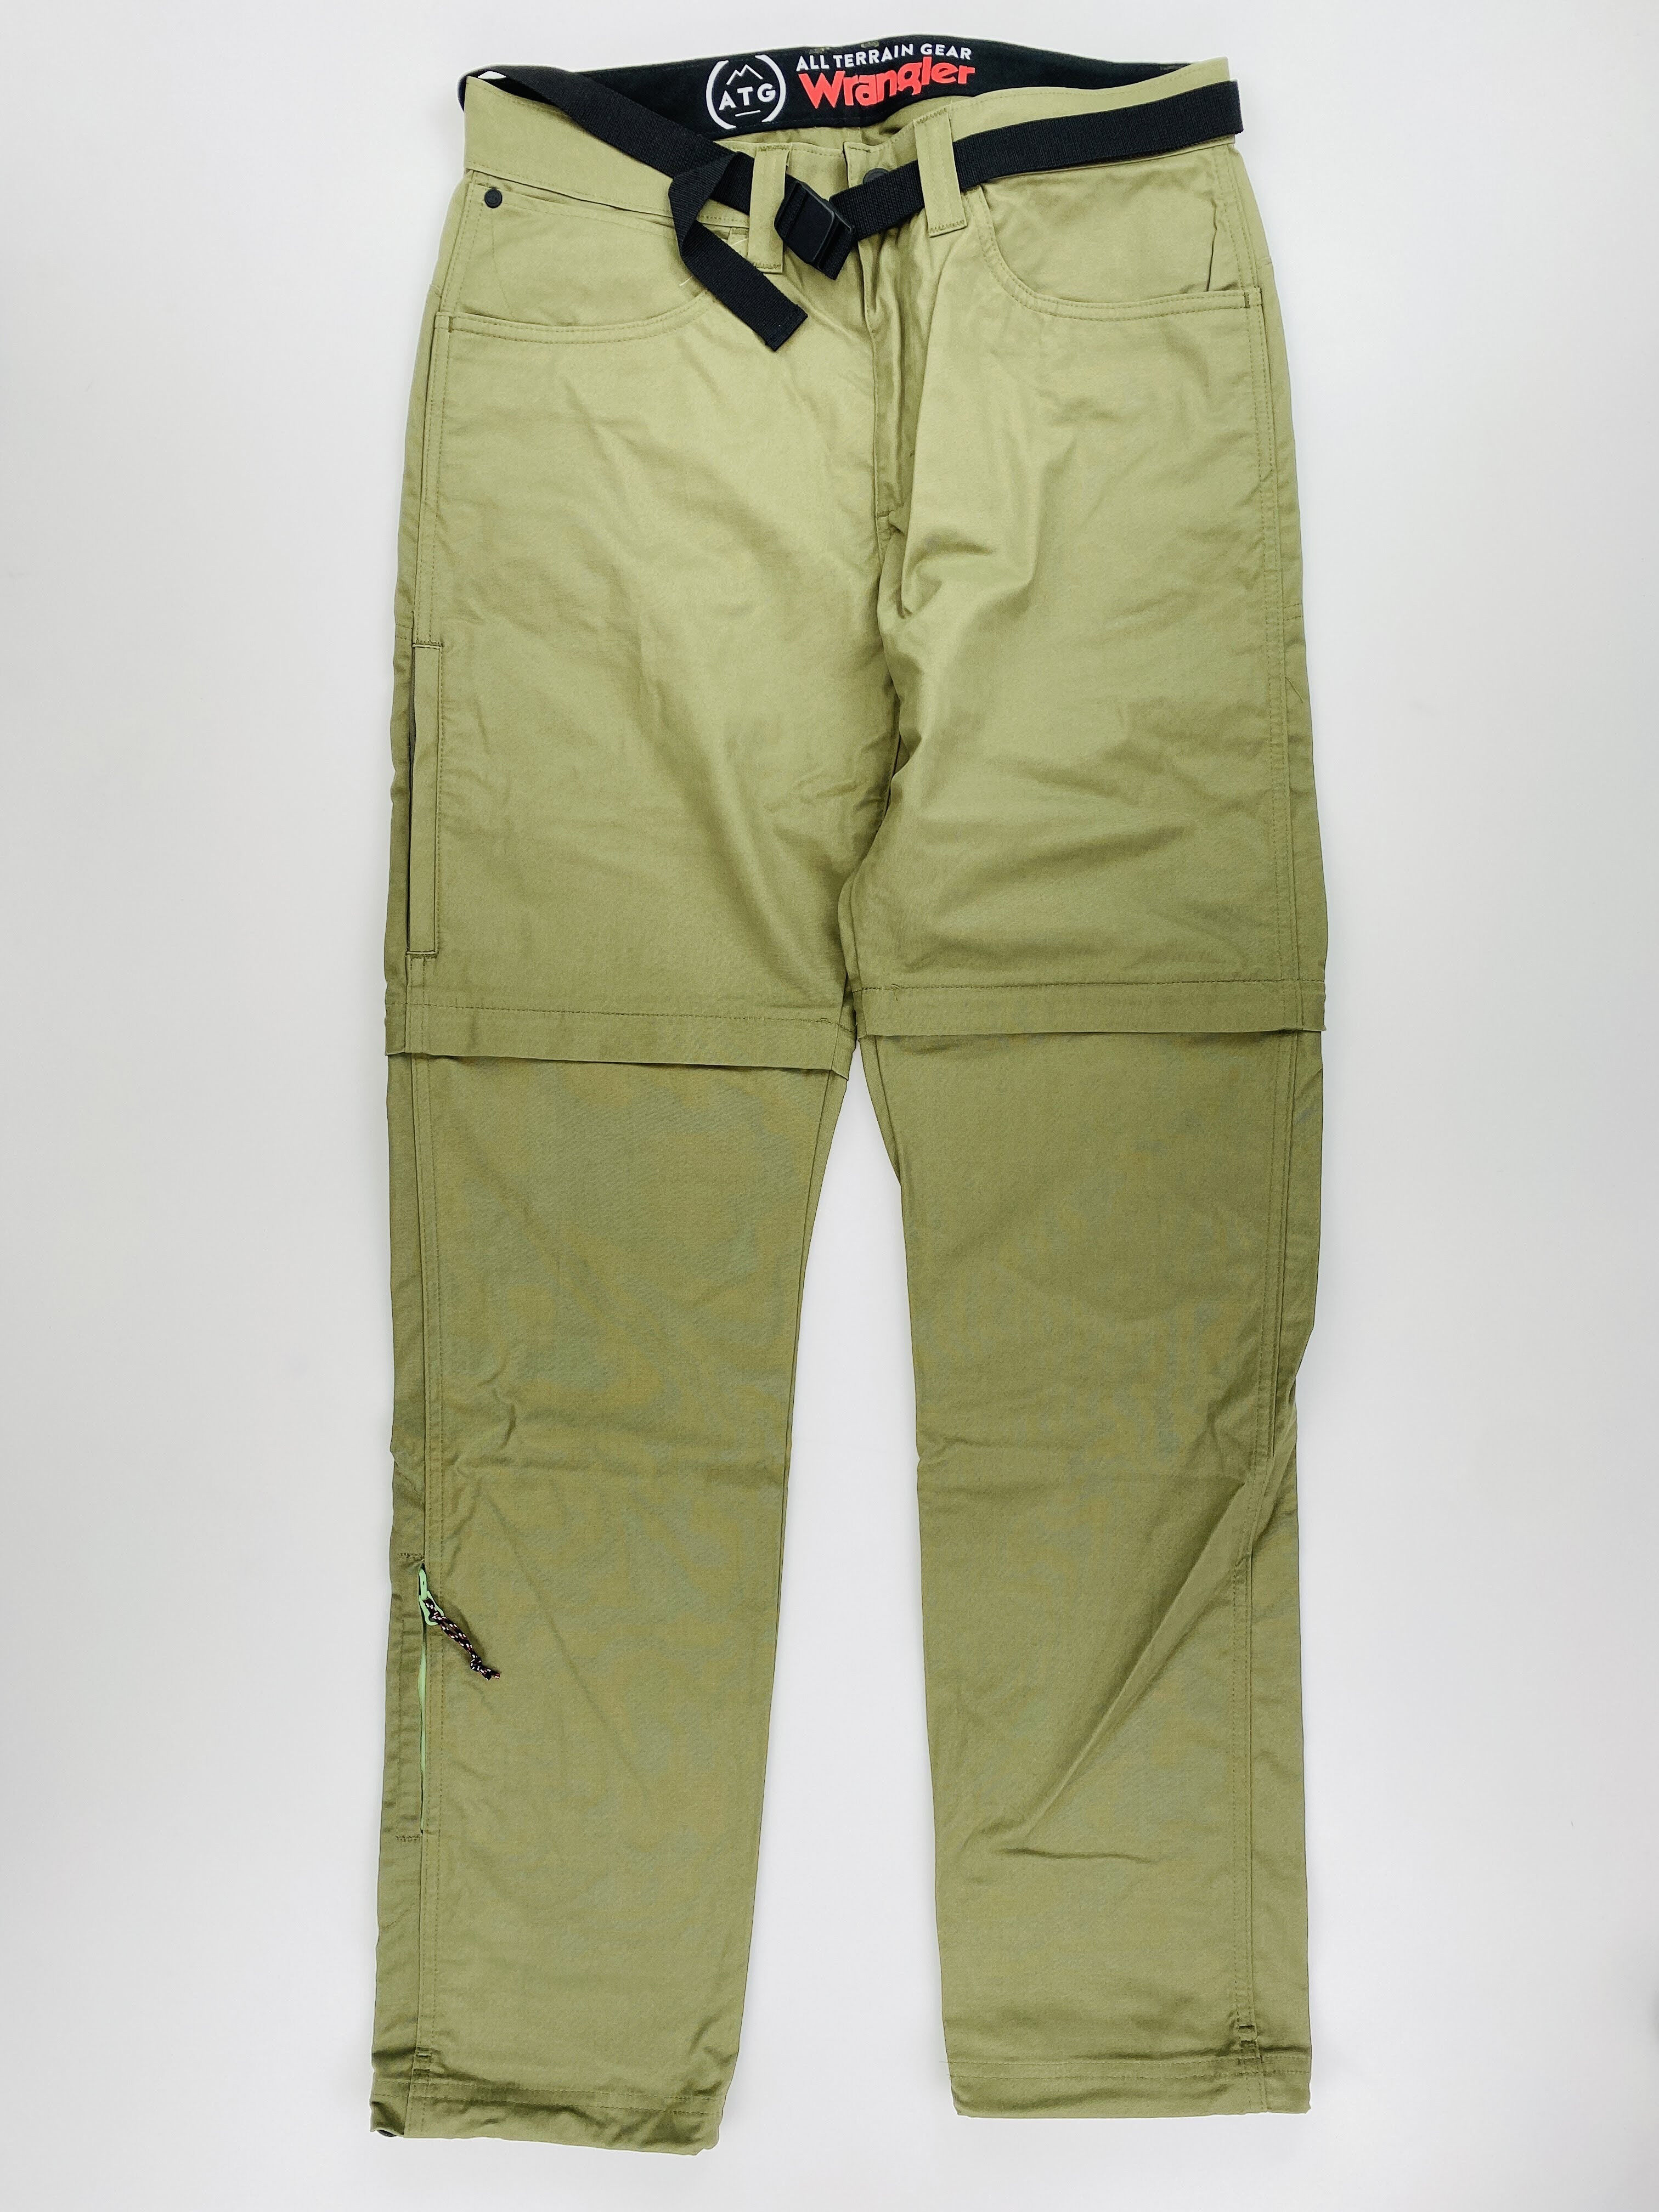 Wrangler Packable Zipoff Carg - Seconde main Pantalon randonnée homme - Vert olive - US 32 | Hardloop